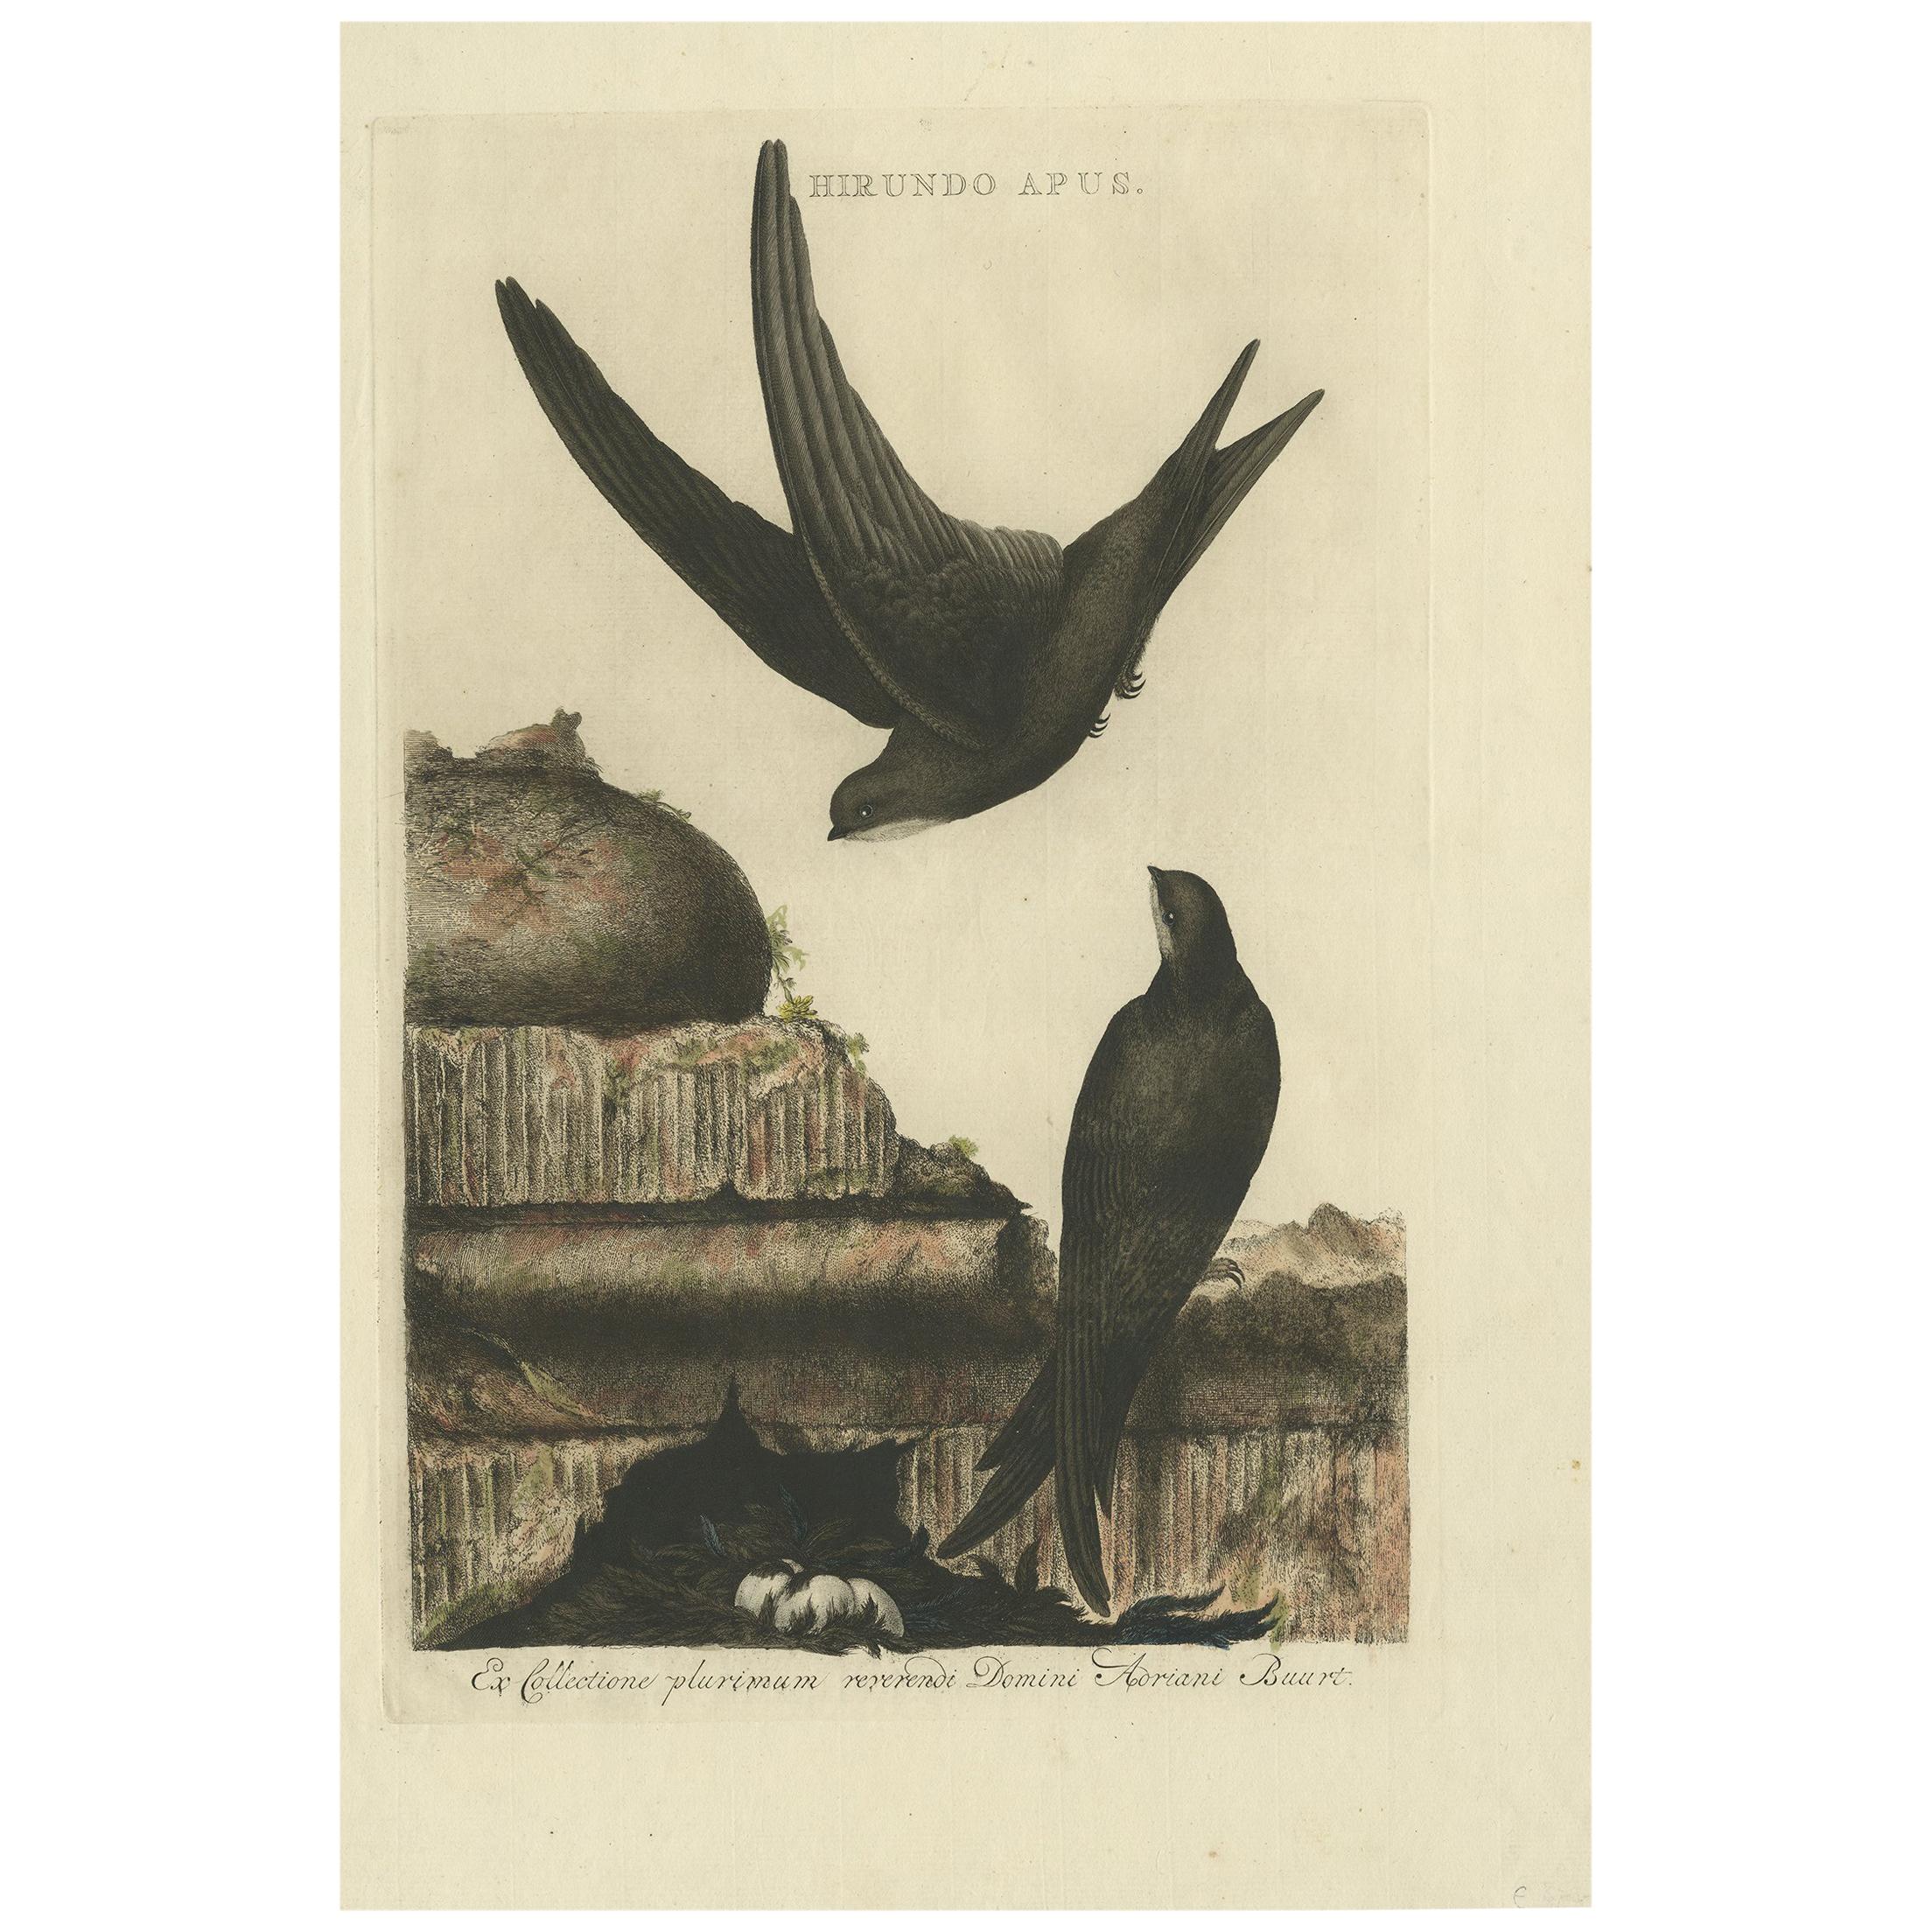 Antique Bird Print of the Common Swift by Sepp & Nozeman, 1770